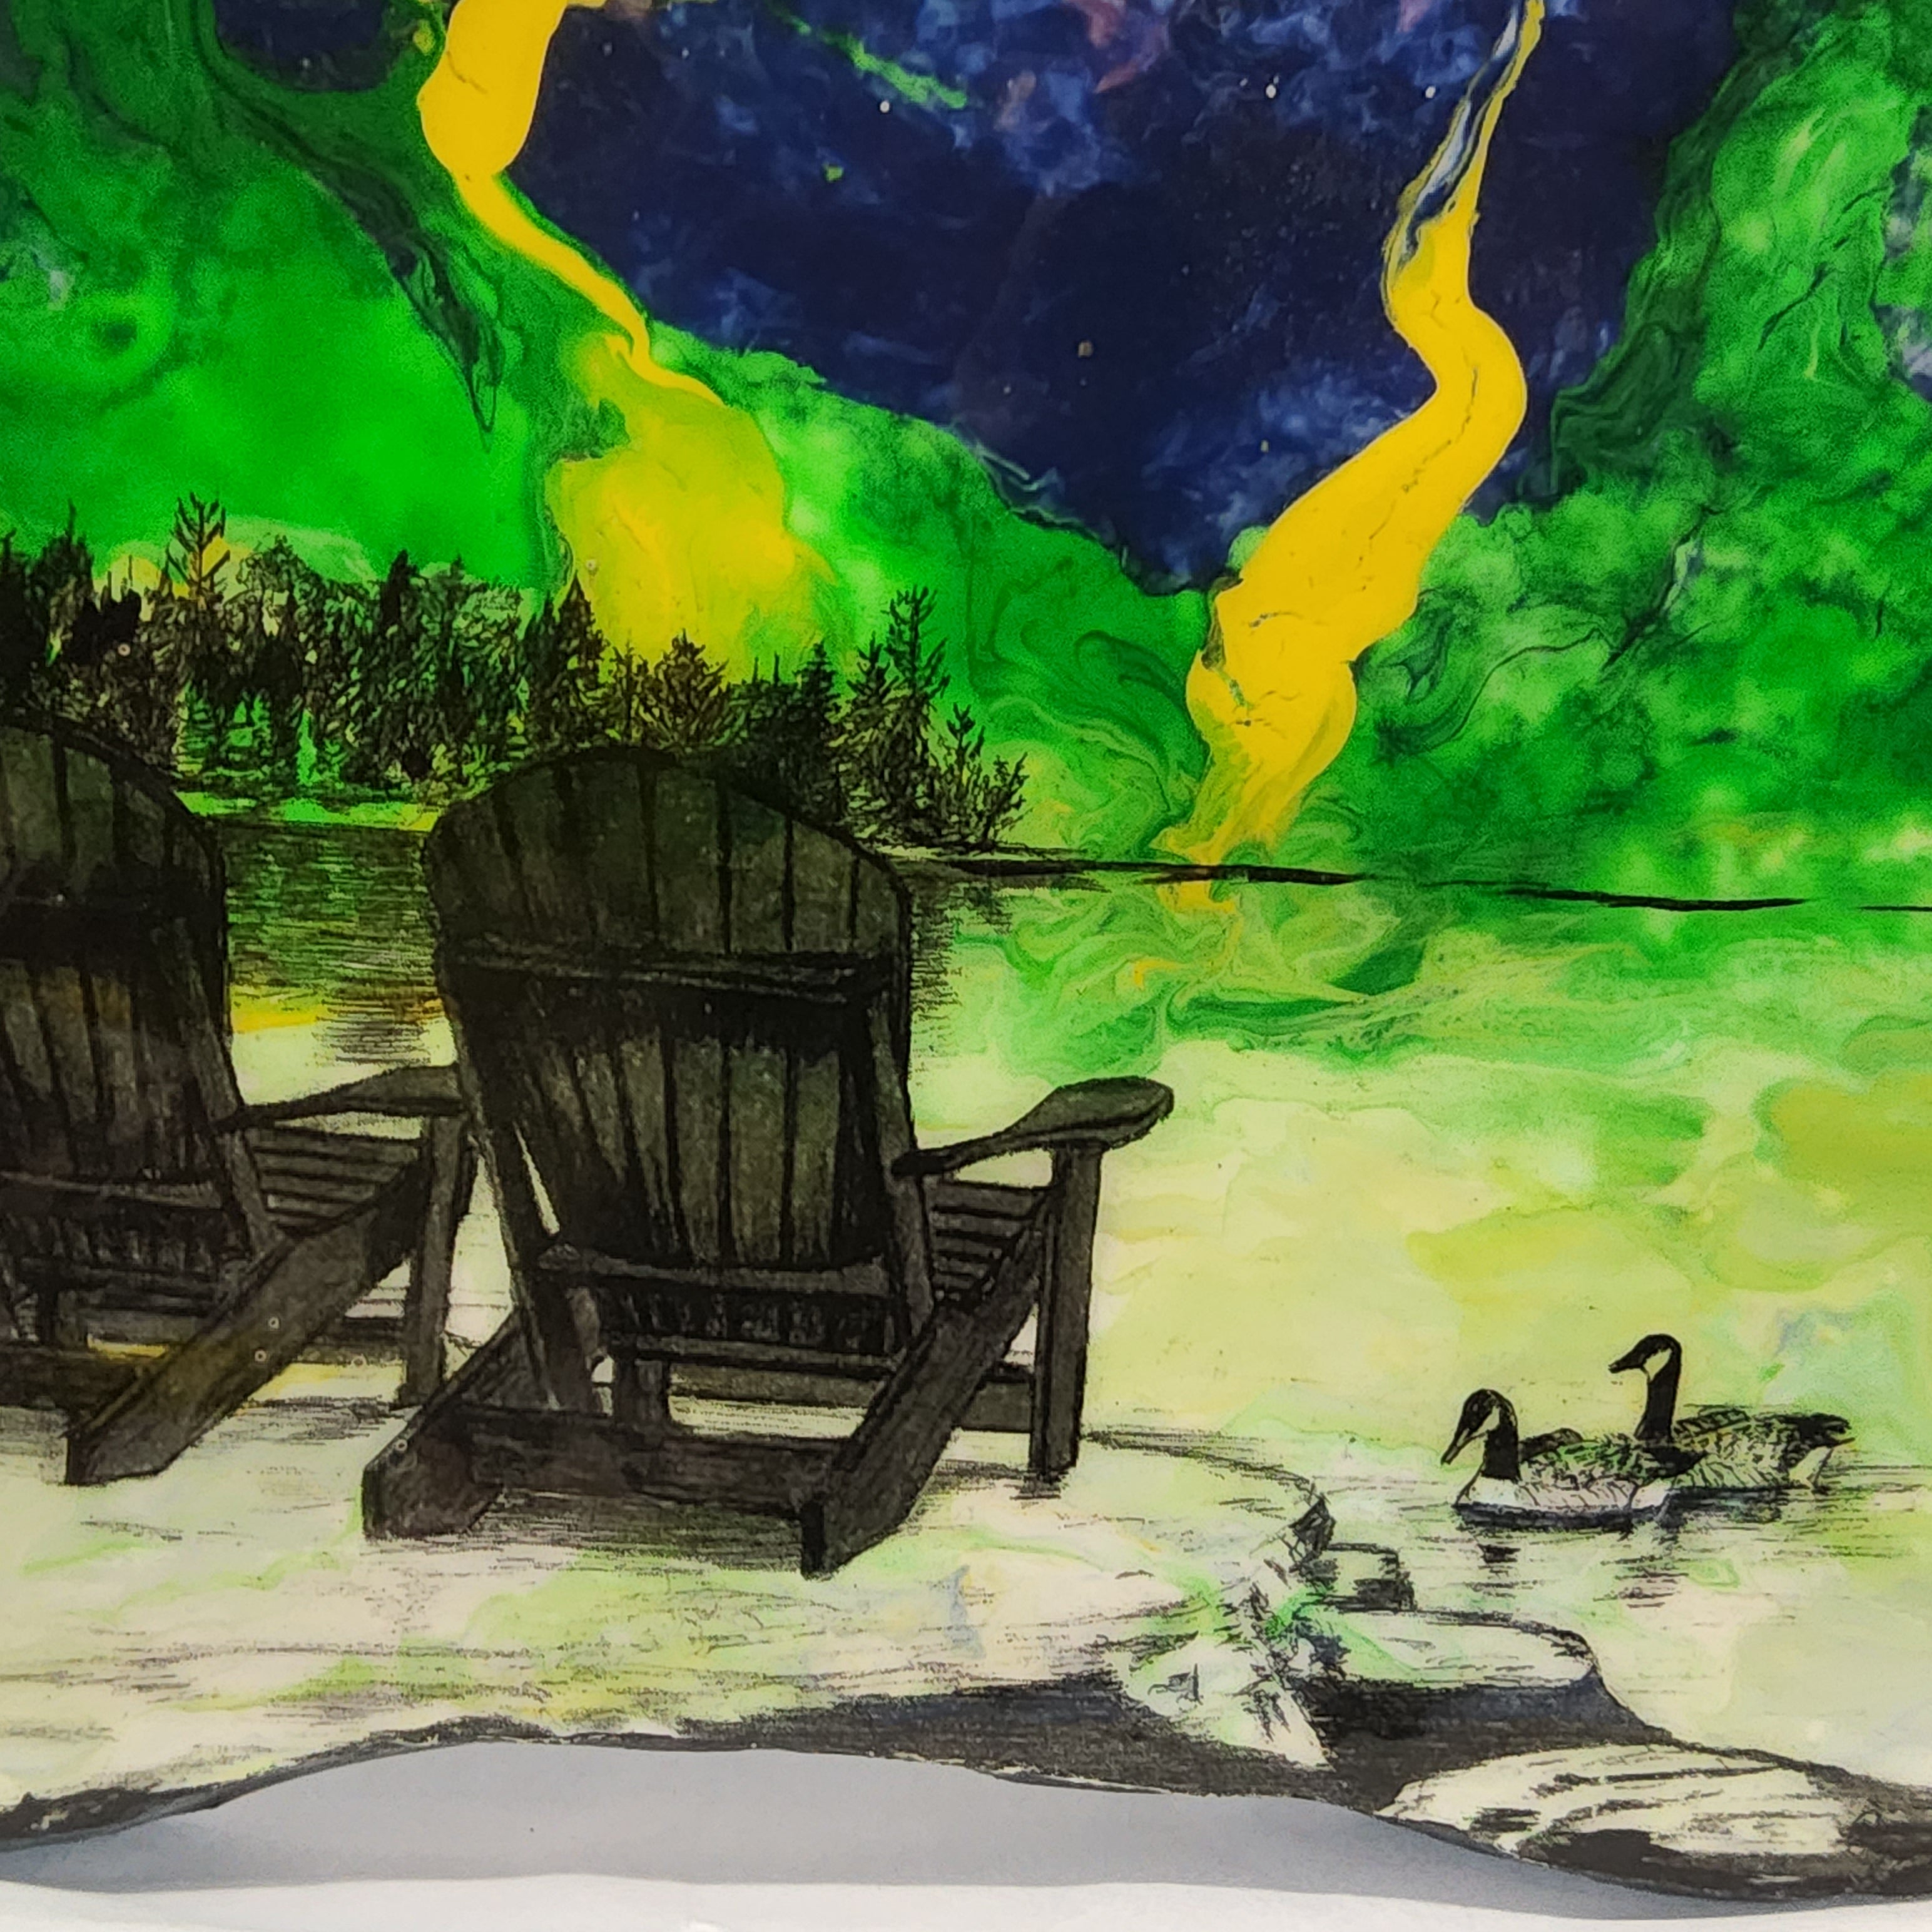 Stone Decor - Muskoka Chairs + Canada Geese Northern Lights Scene - Large - Glossy Finish